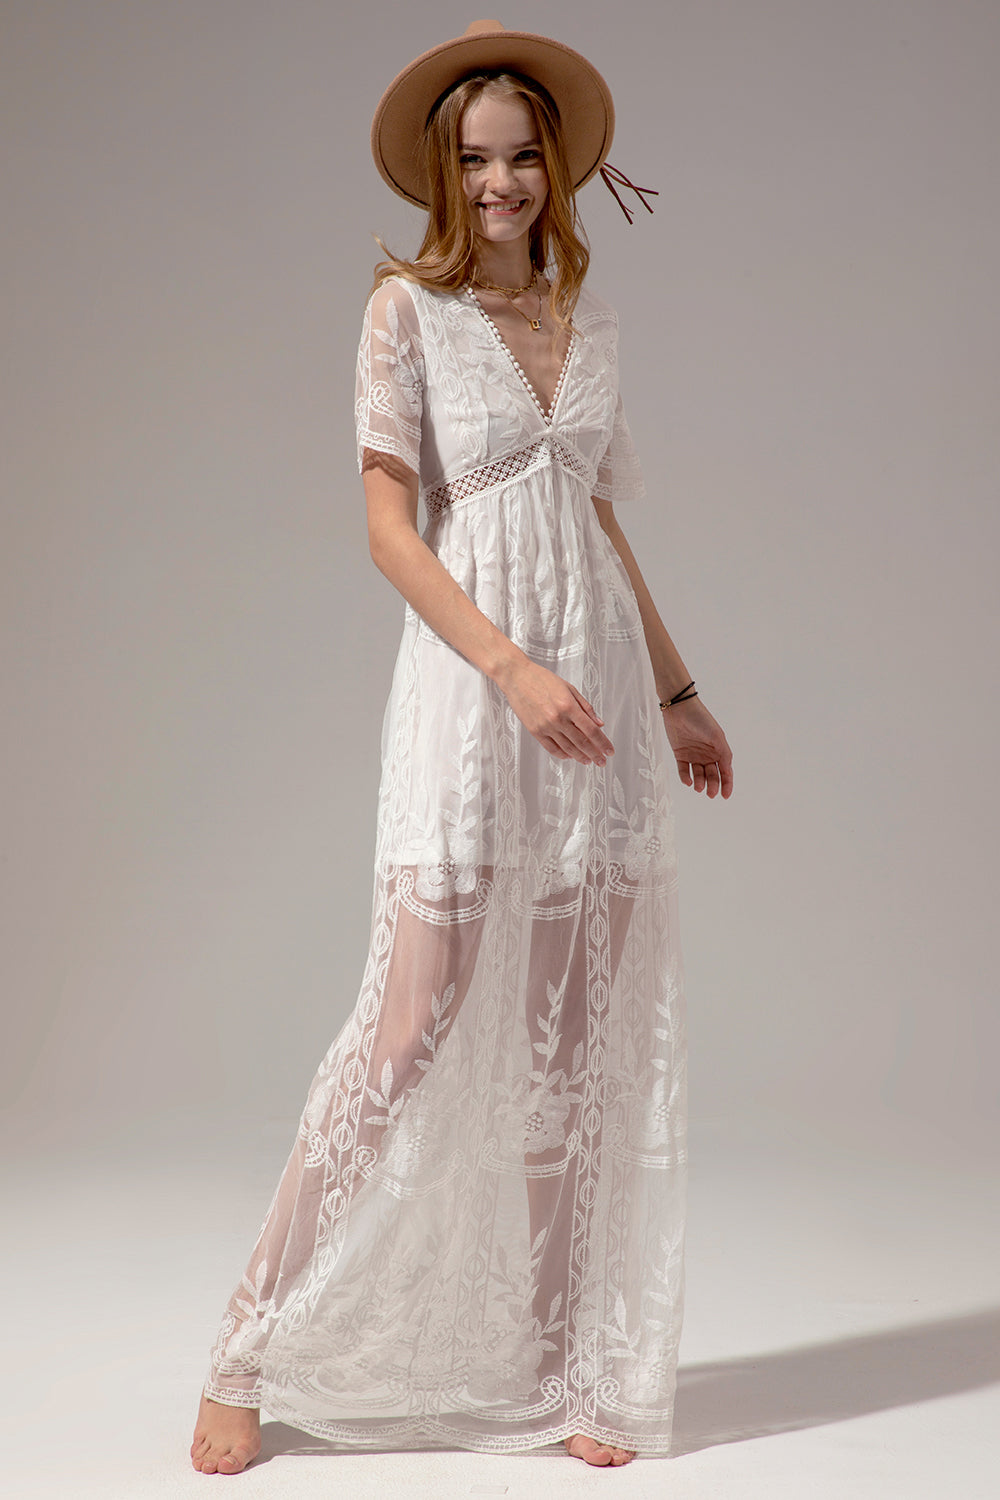 ZAPAKA White Lace Dress Off Shoulder Maxi Short Sleeves Summer Boho Beach  Dress